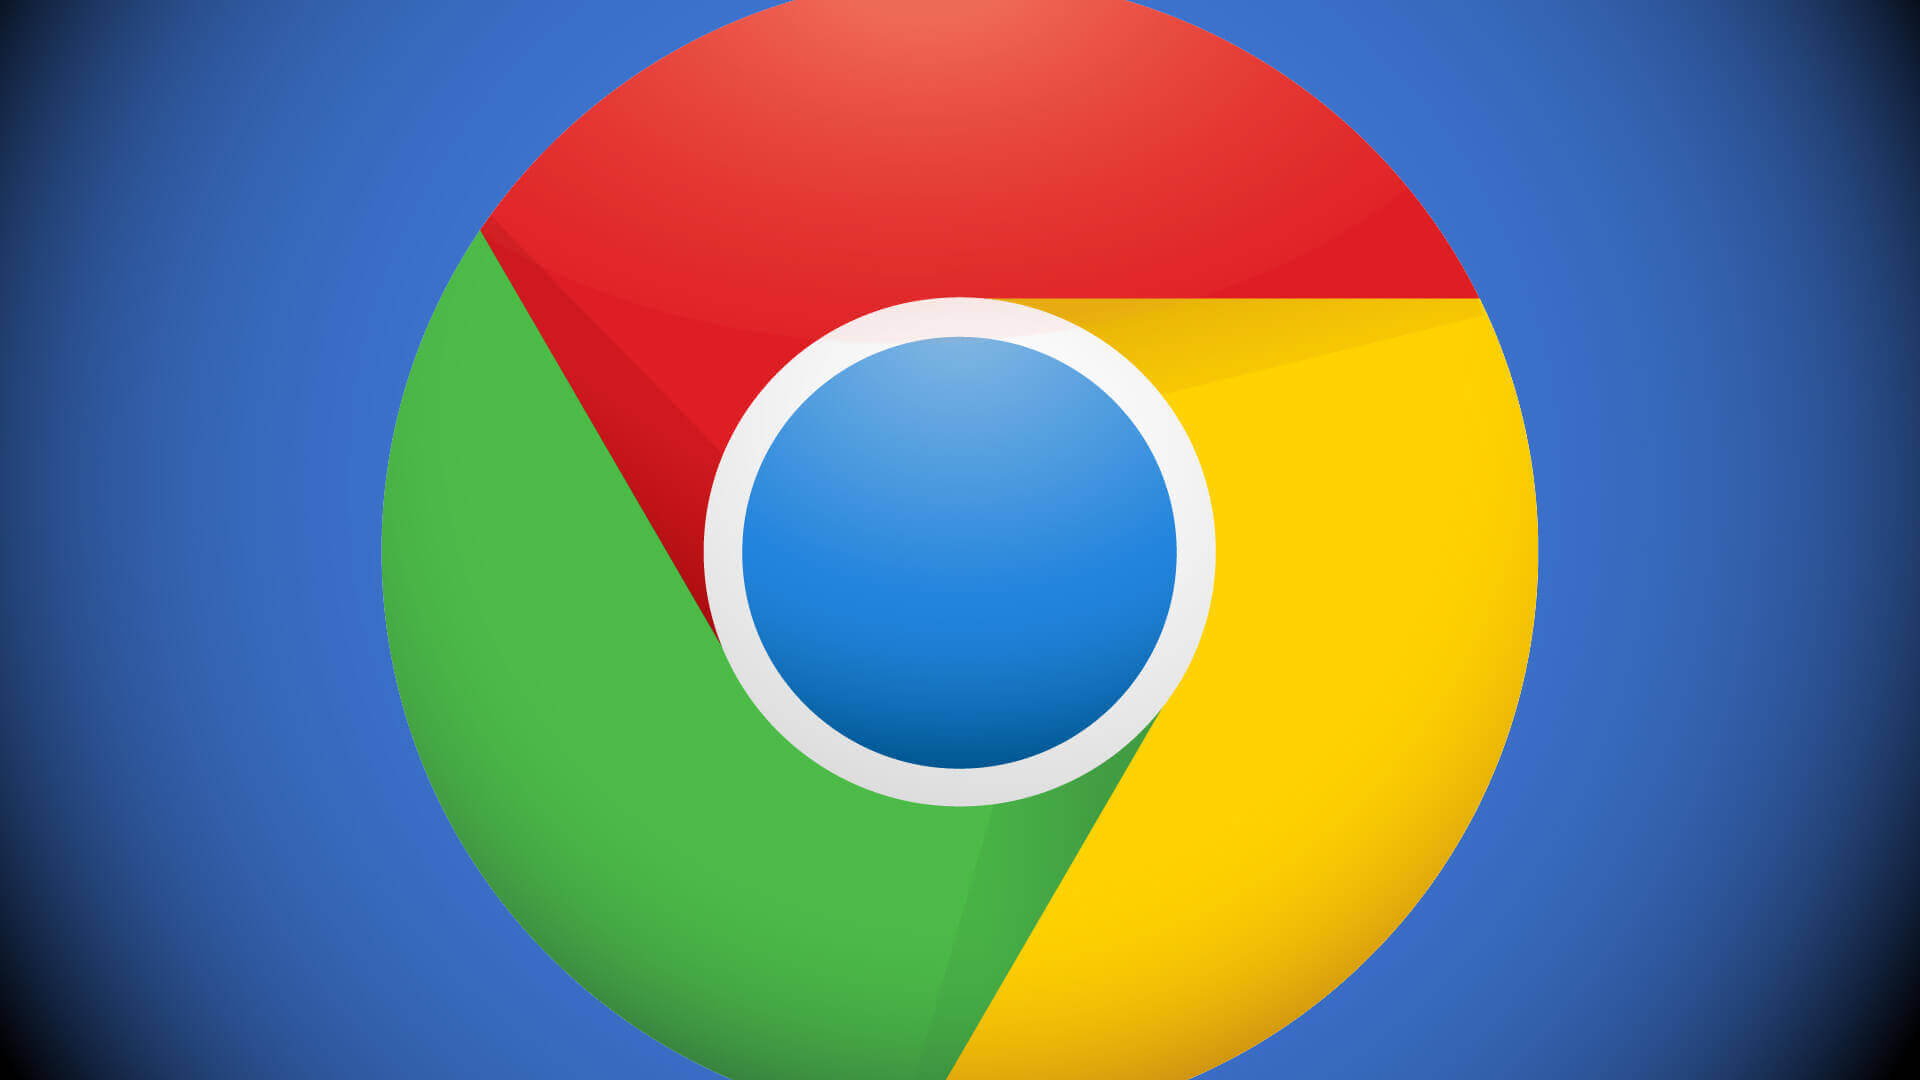 update google chrome browser